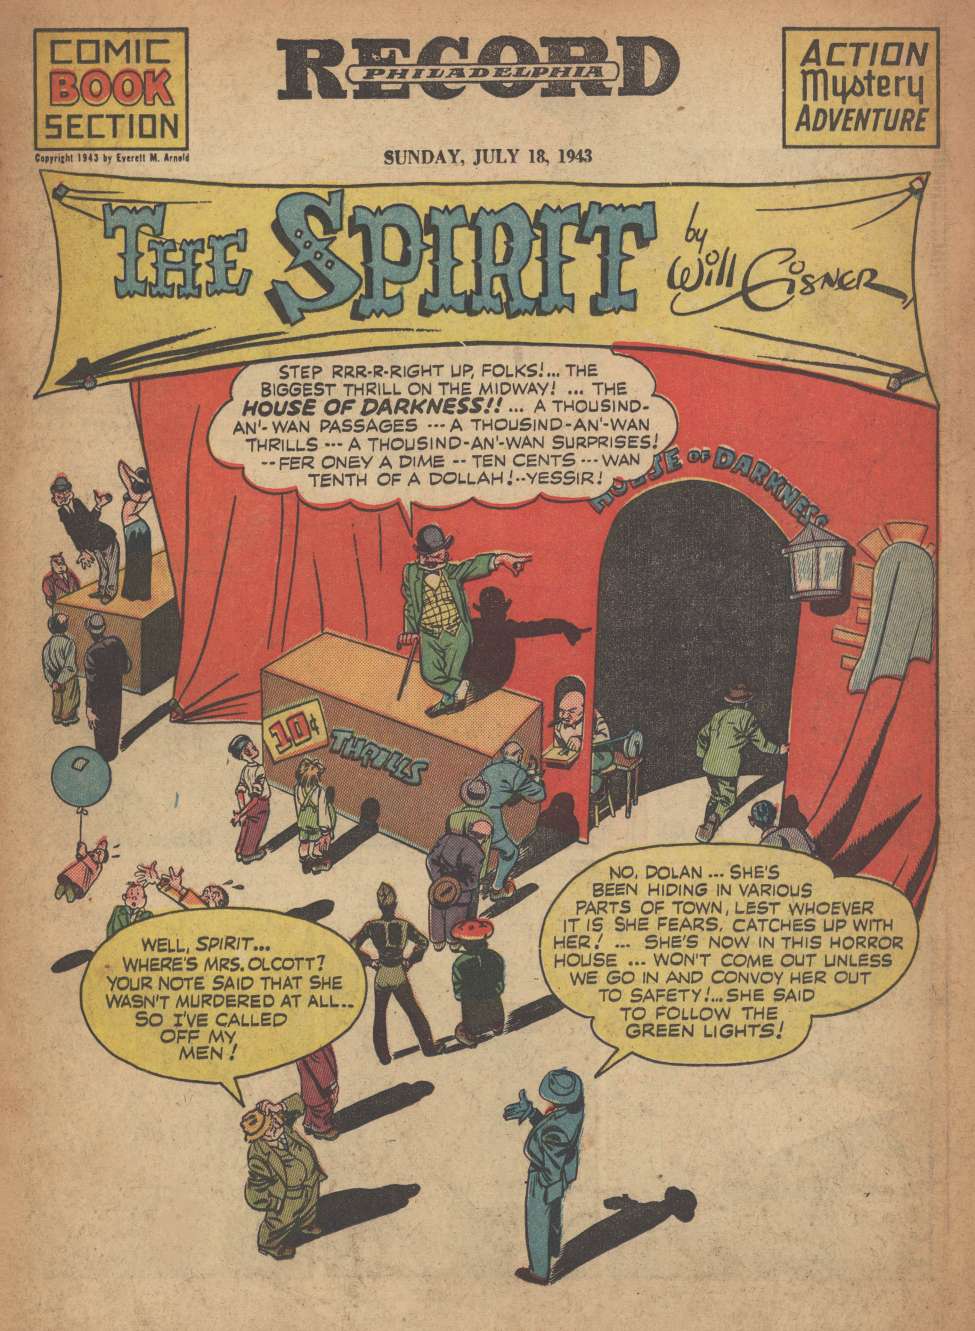 Comic Book Cover For The Spirit (1943-07-18) - Philadelphia Record